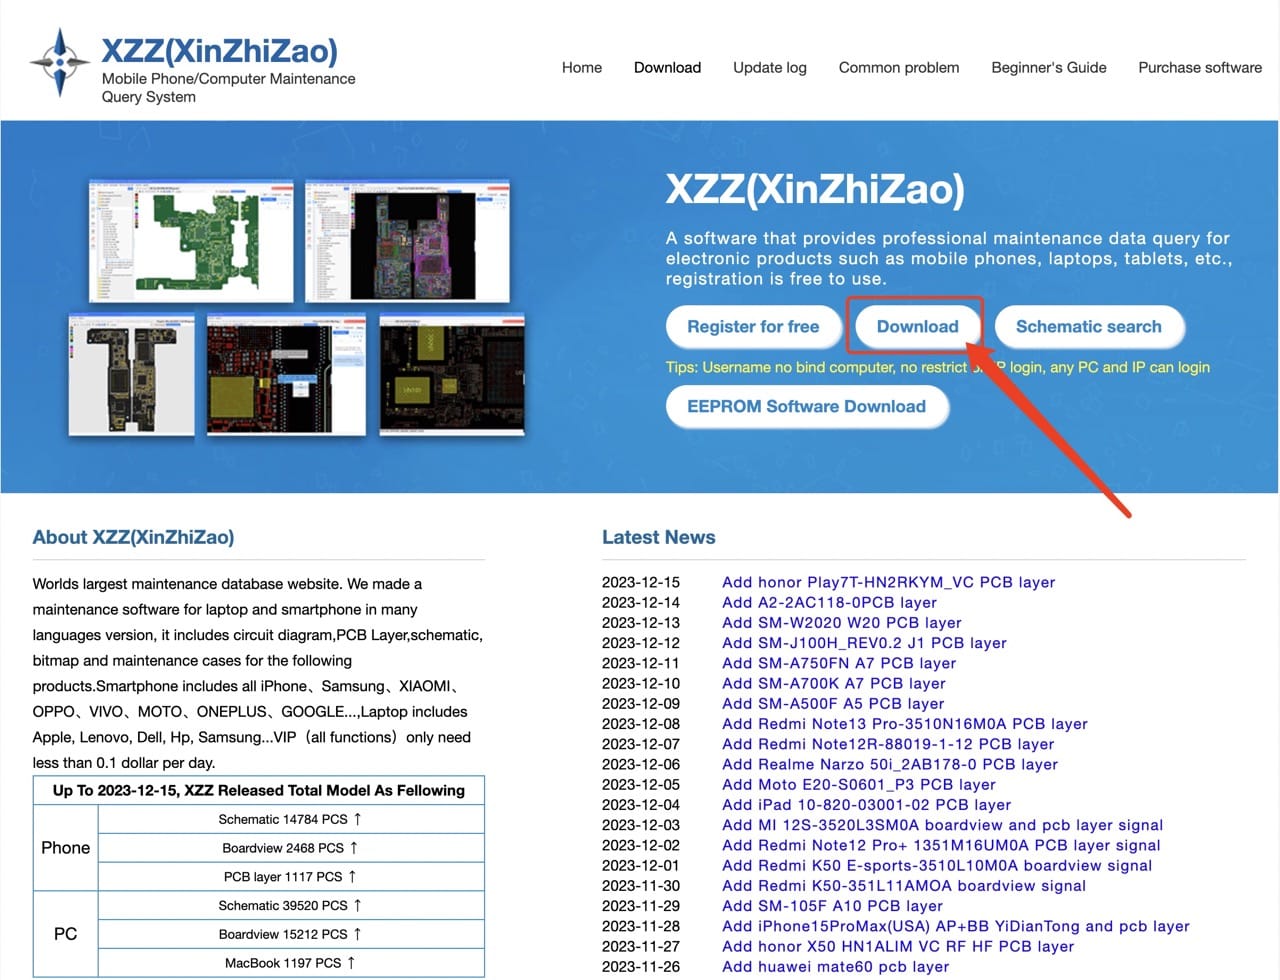 Dwonload XinZhiZao software